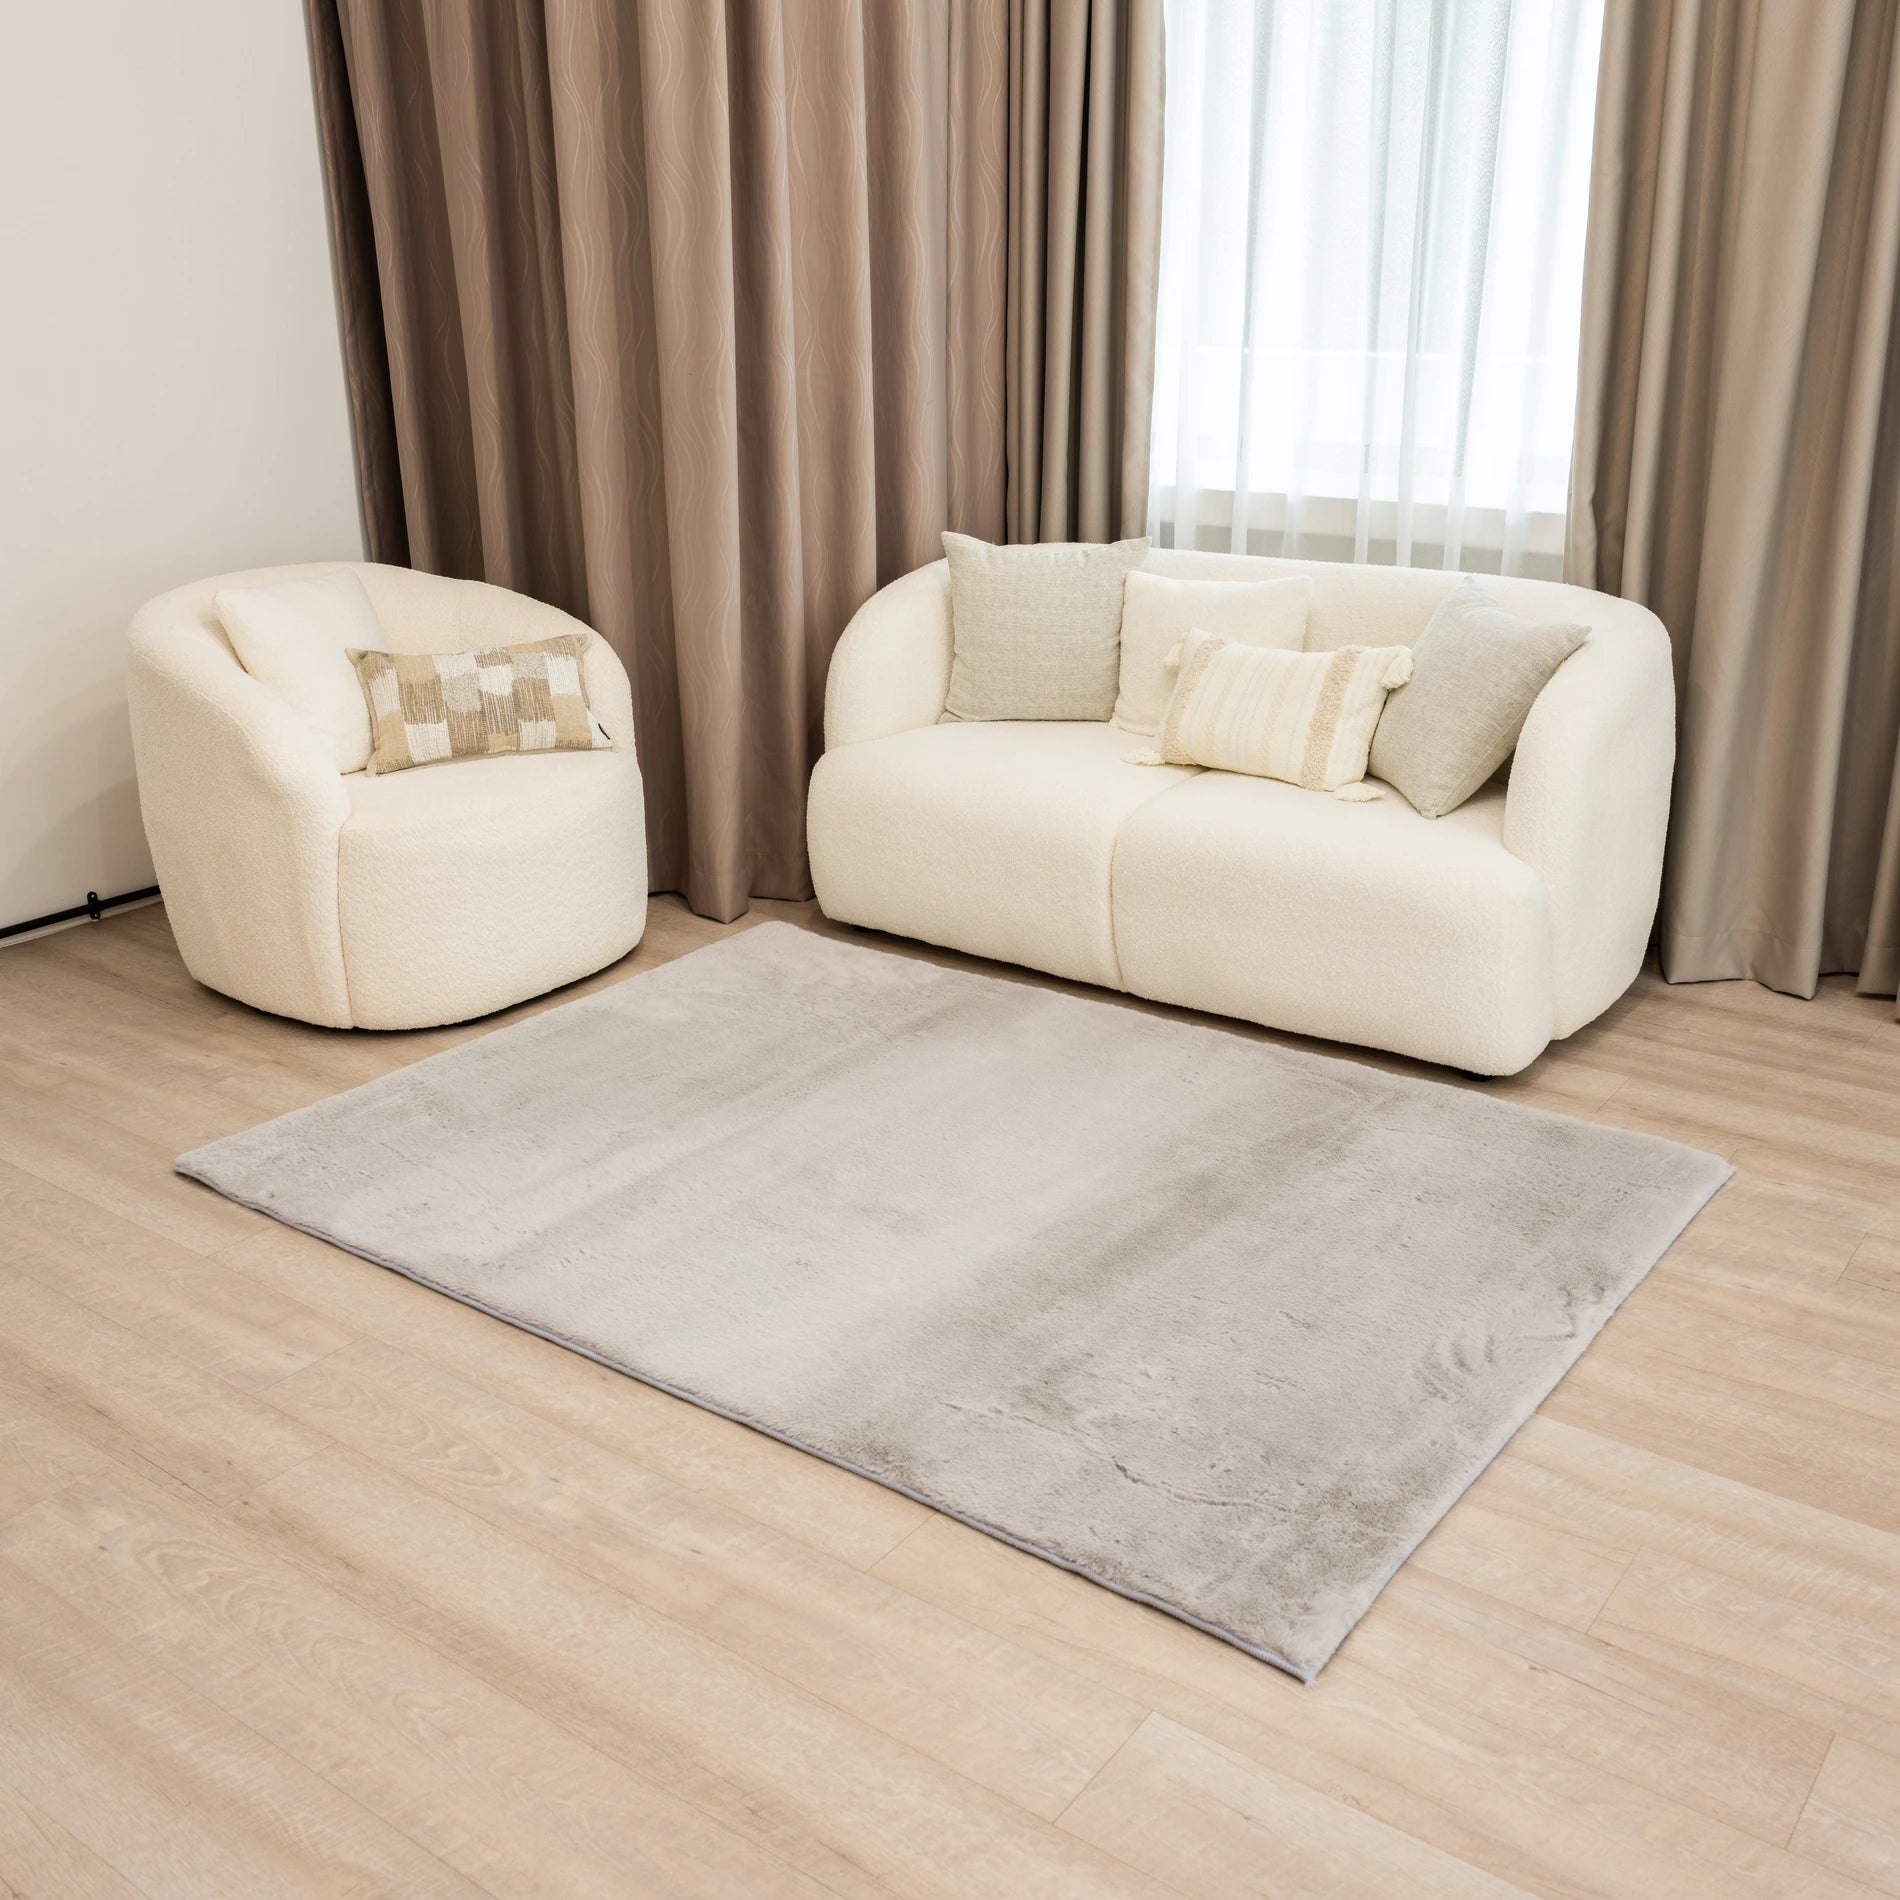 Steel Grey Cloud Fur Carpet - The Carpetier™